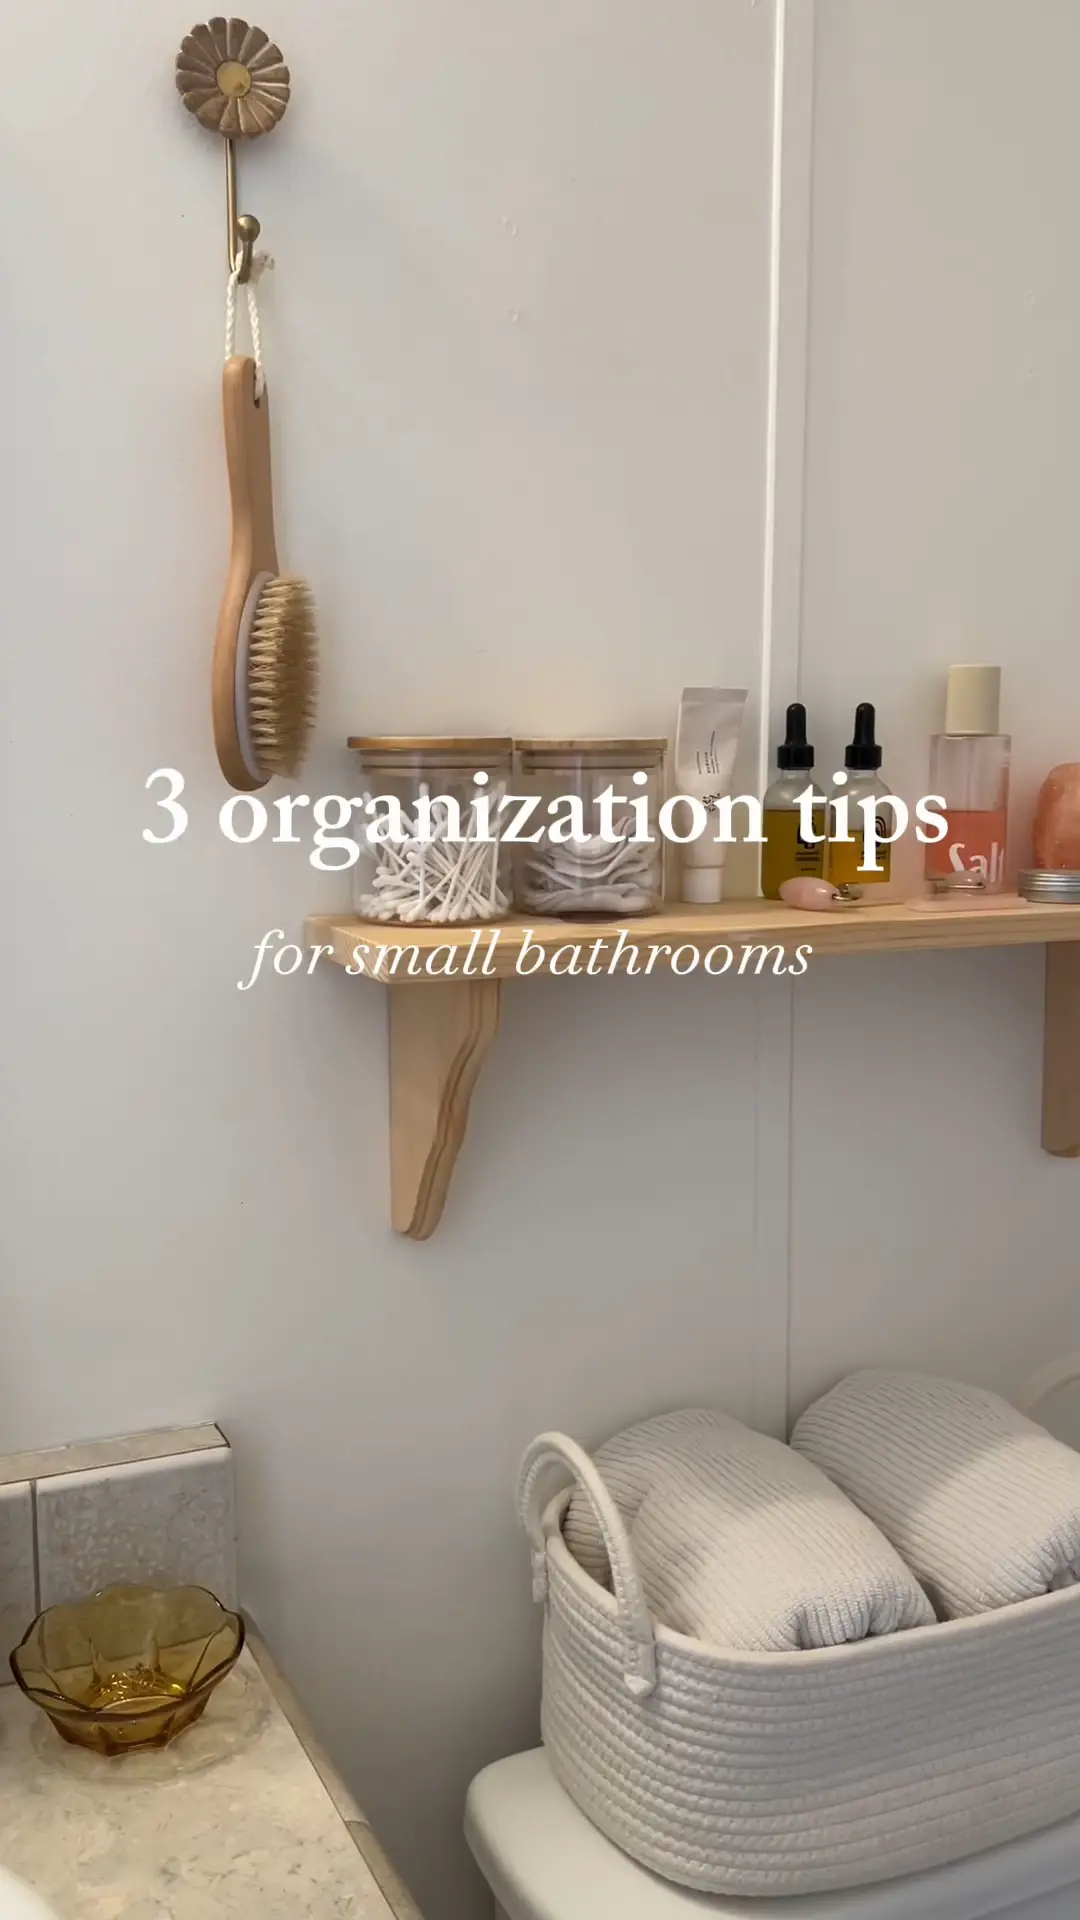 Organization ideas for small bathrooms - Home organization ideas